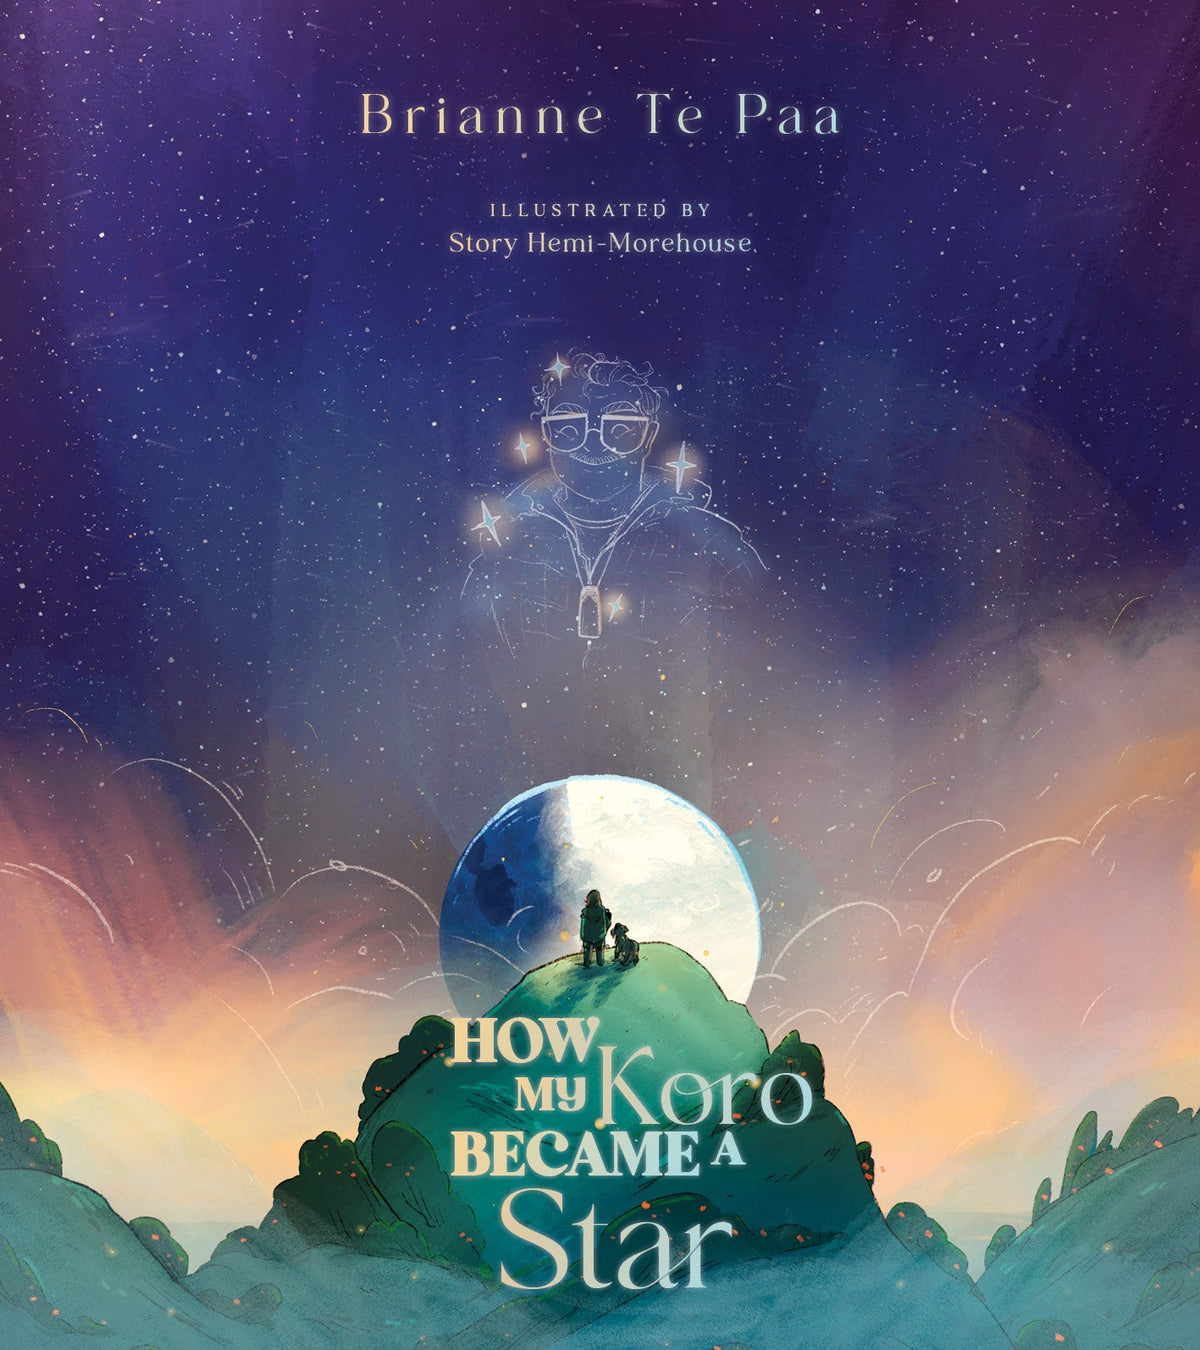 How My Koro Became a Star by Brianne Te Paa